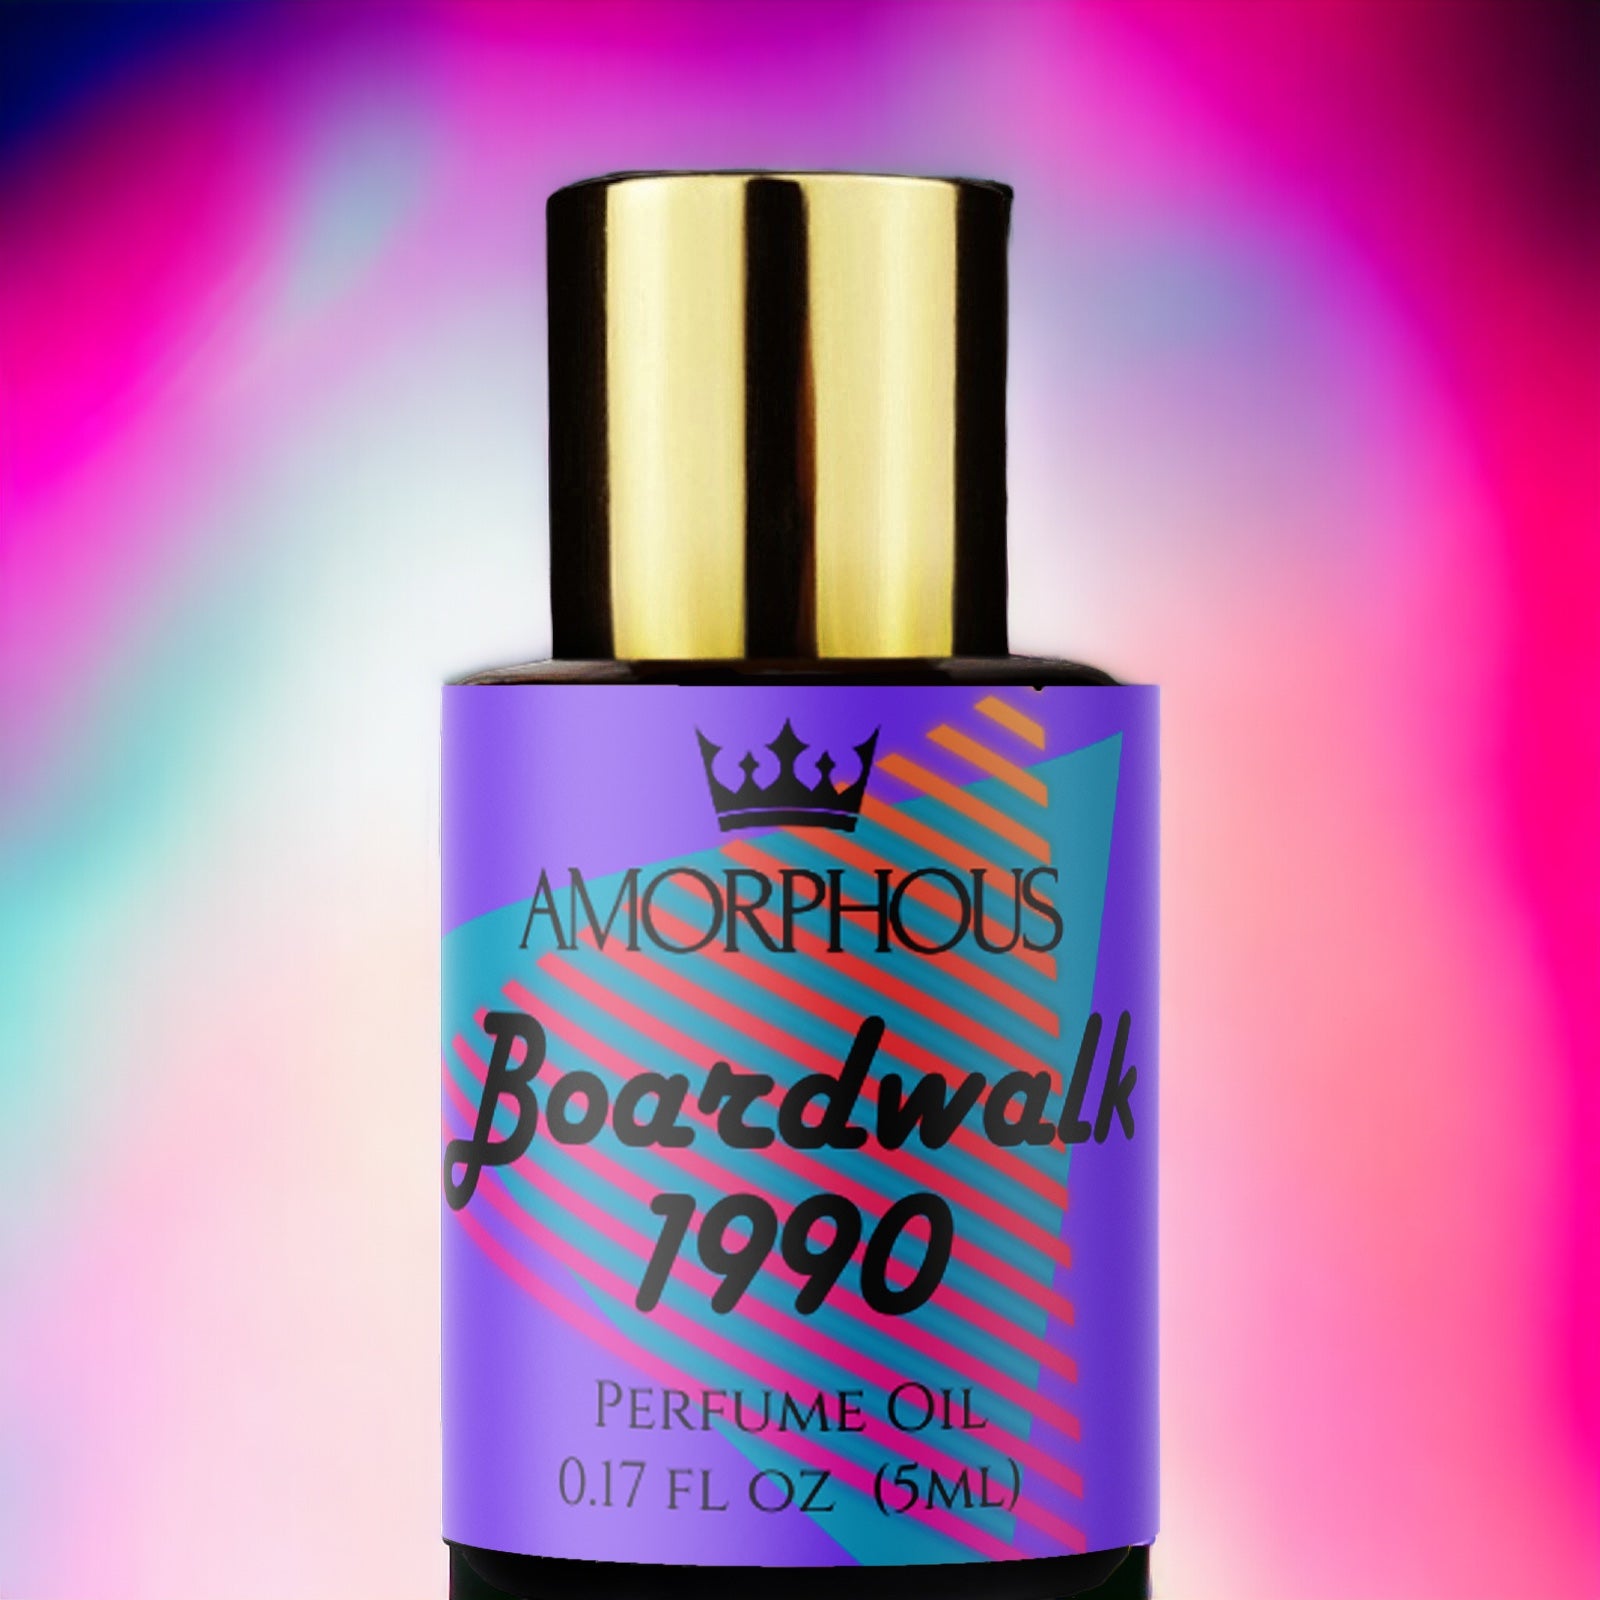 boardwalk 1990 perfume